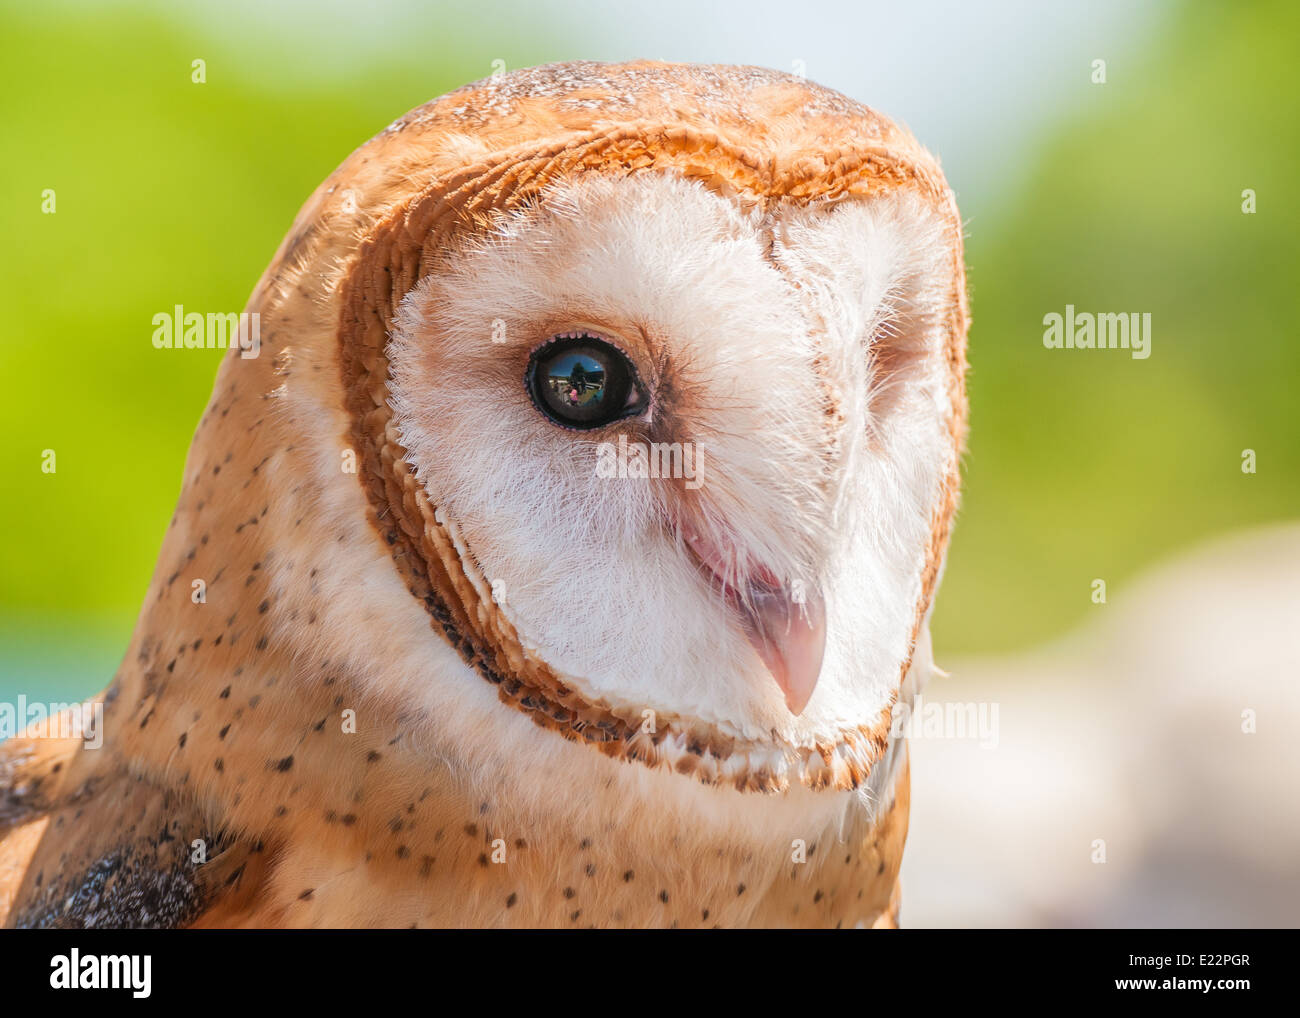 Barn Owl closeup headshot looking right. Stock Photo